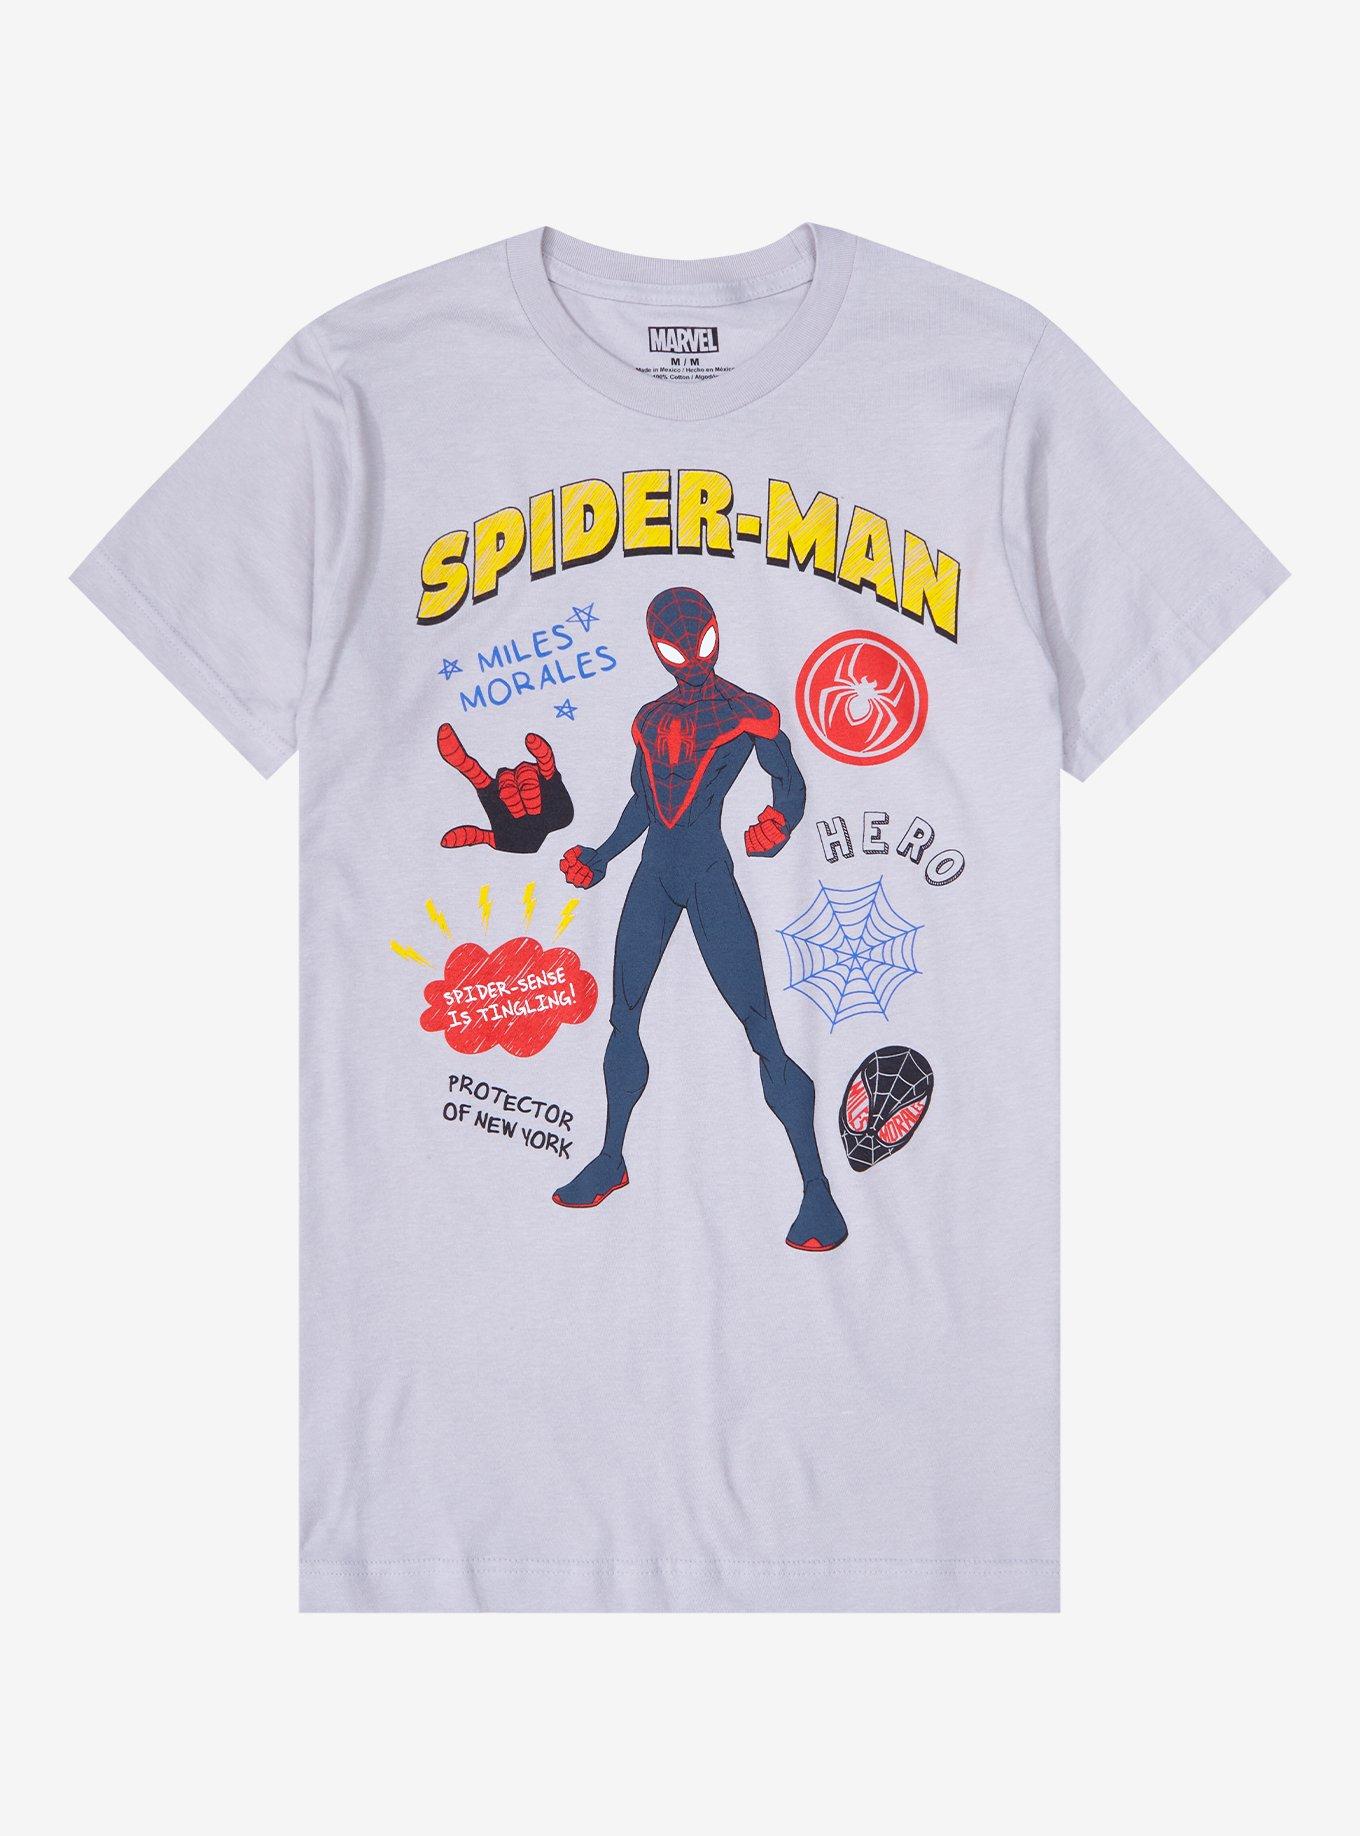 2099 Spider-Man O'Hara Long Sleeve Compression Shirt - Totally